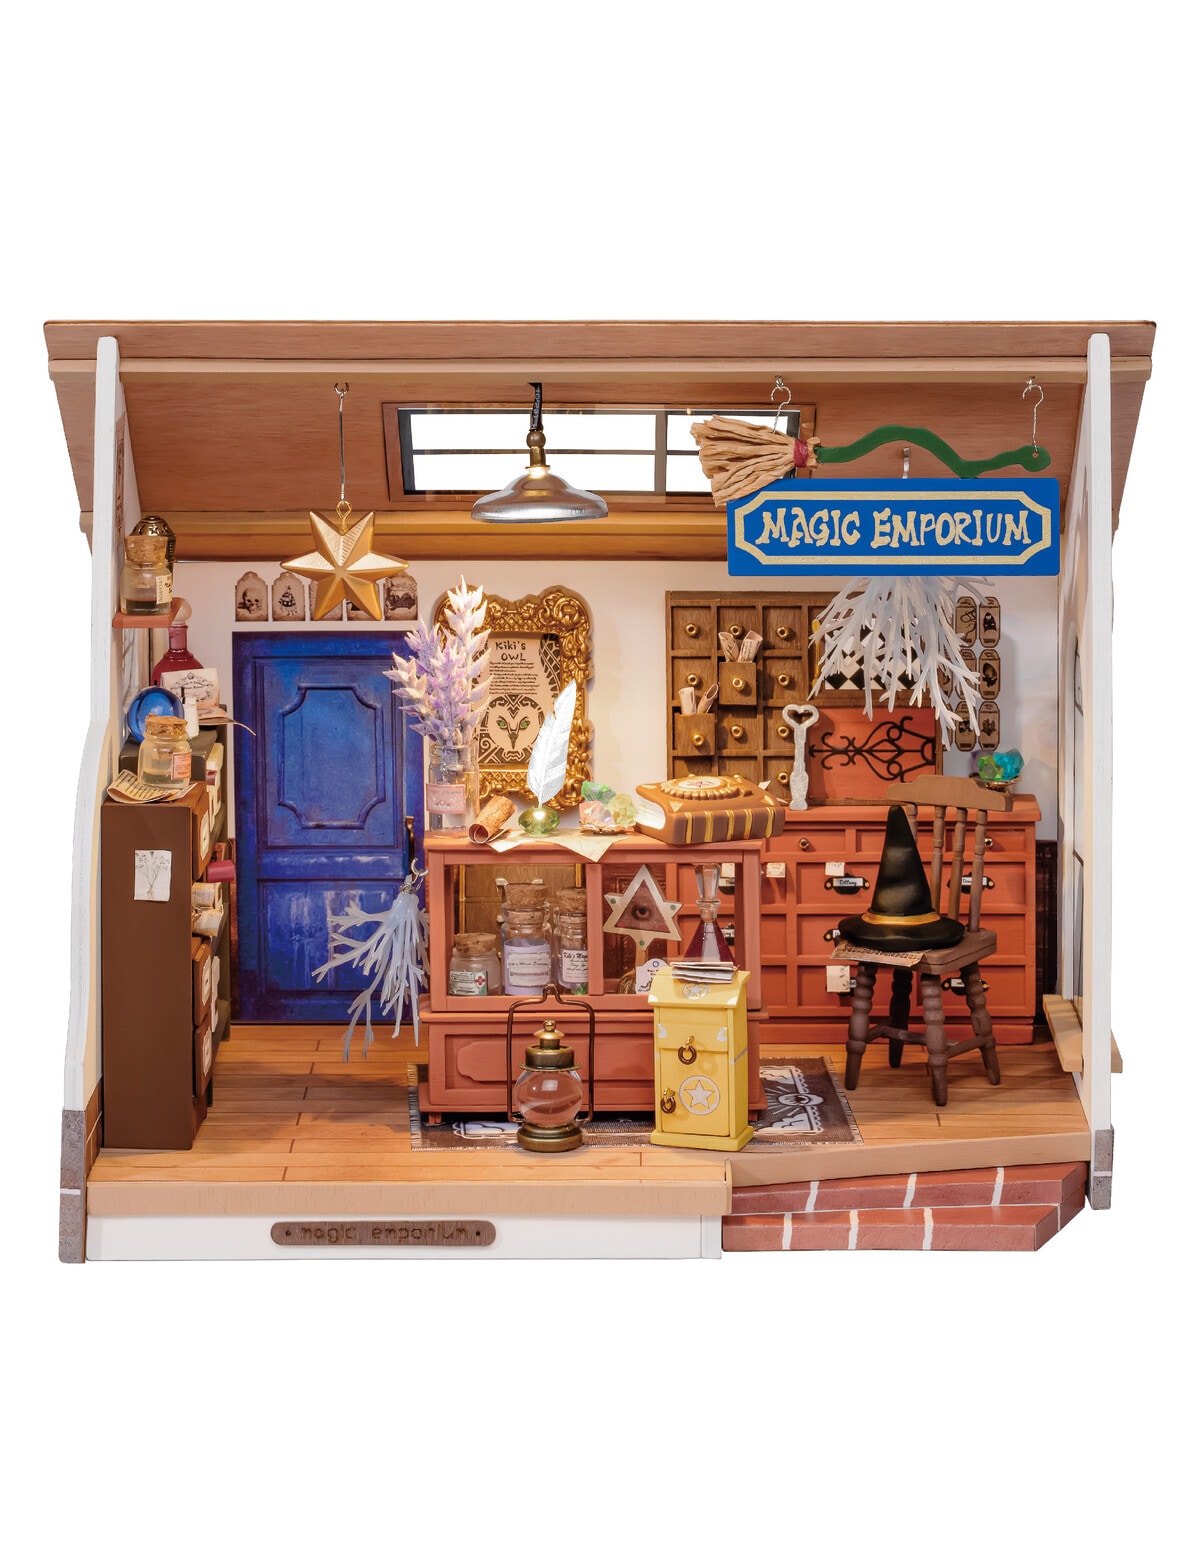 Rolife DIY Craft Kits for Adults Teens 7 Miniature House Kit, DIY Book  Nook Kit Diorama Kit Gifts for Girls Boys Desk Indoor Decor (Dark Castle) 